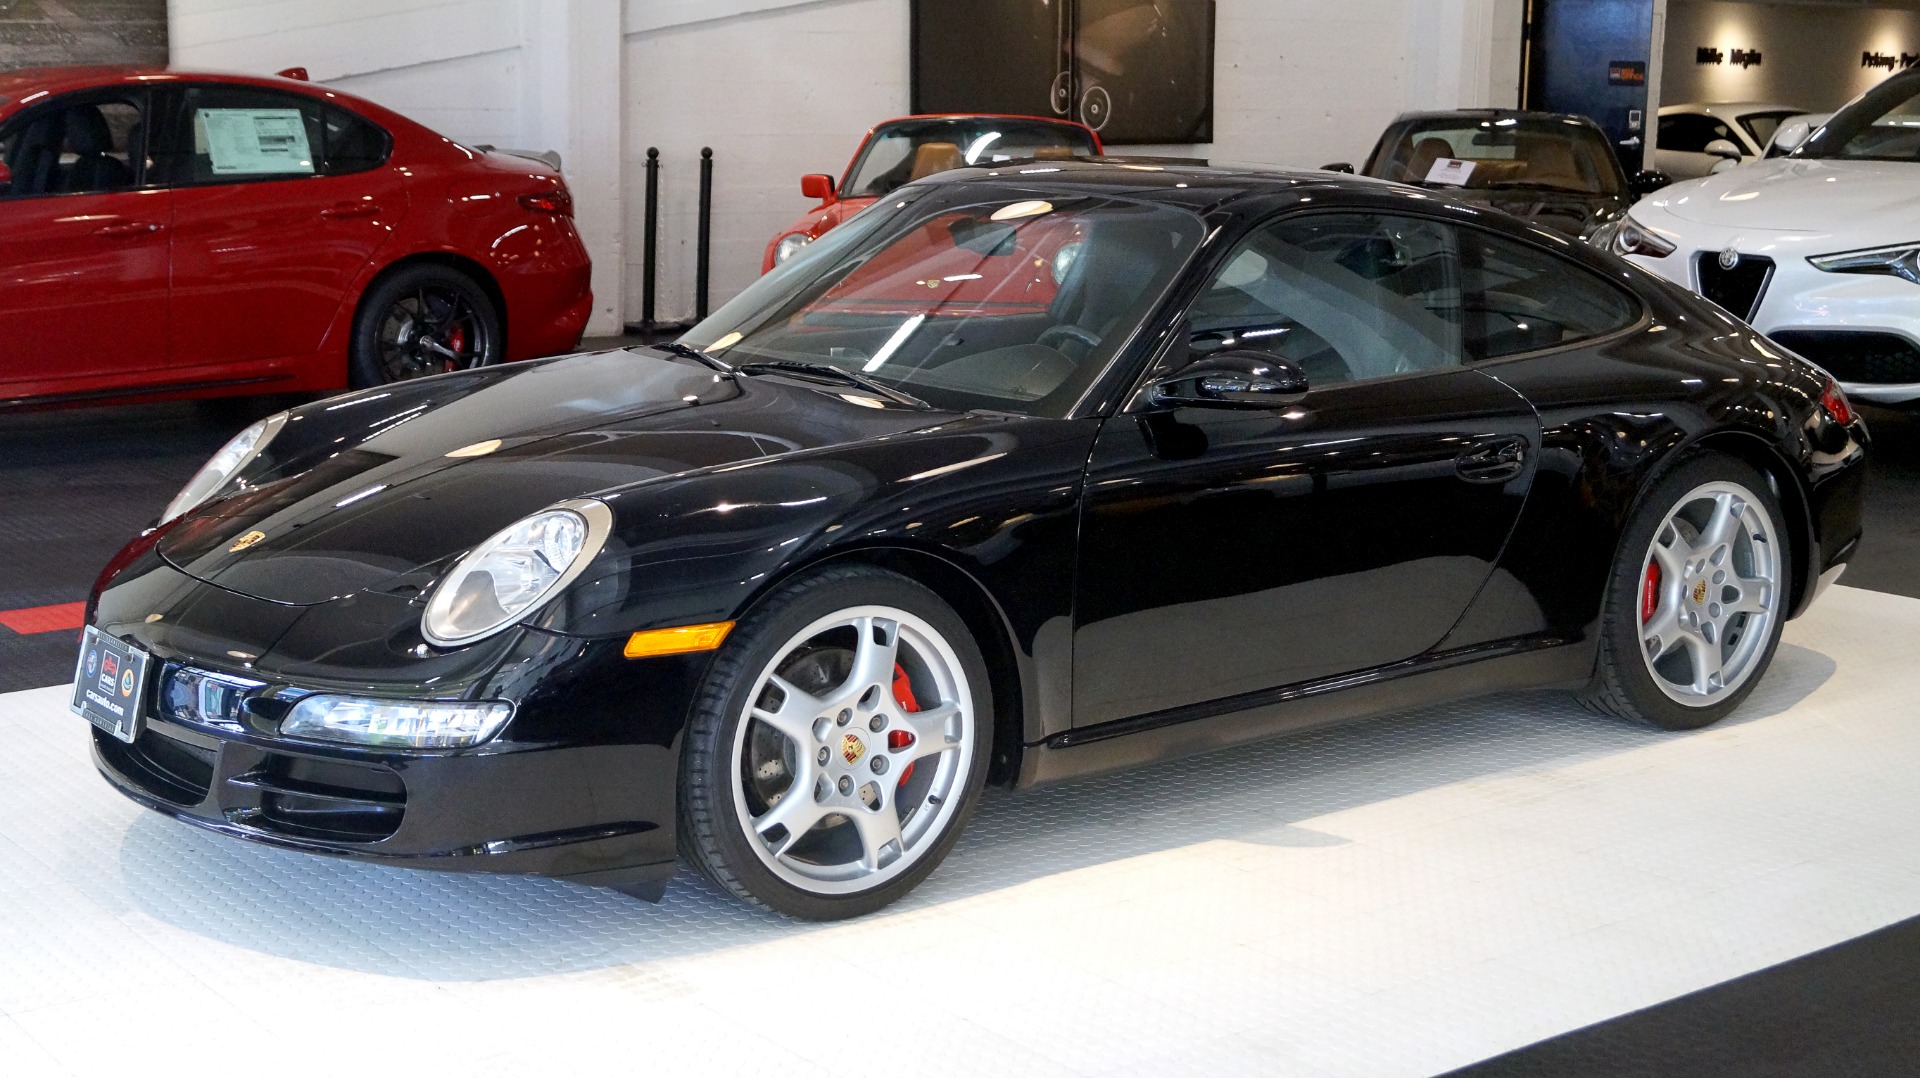 Used 2006 Porsche 911 Carrera S For Sale 36700 Cars